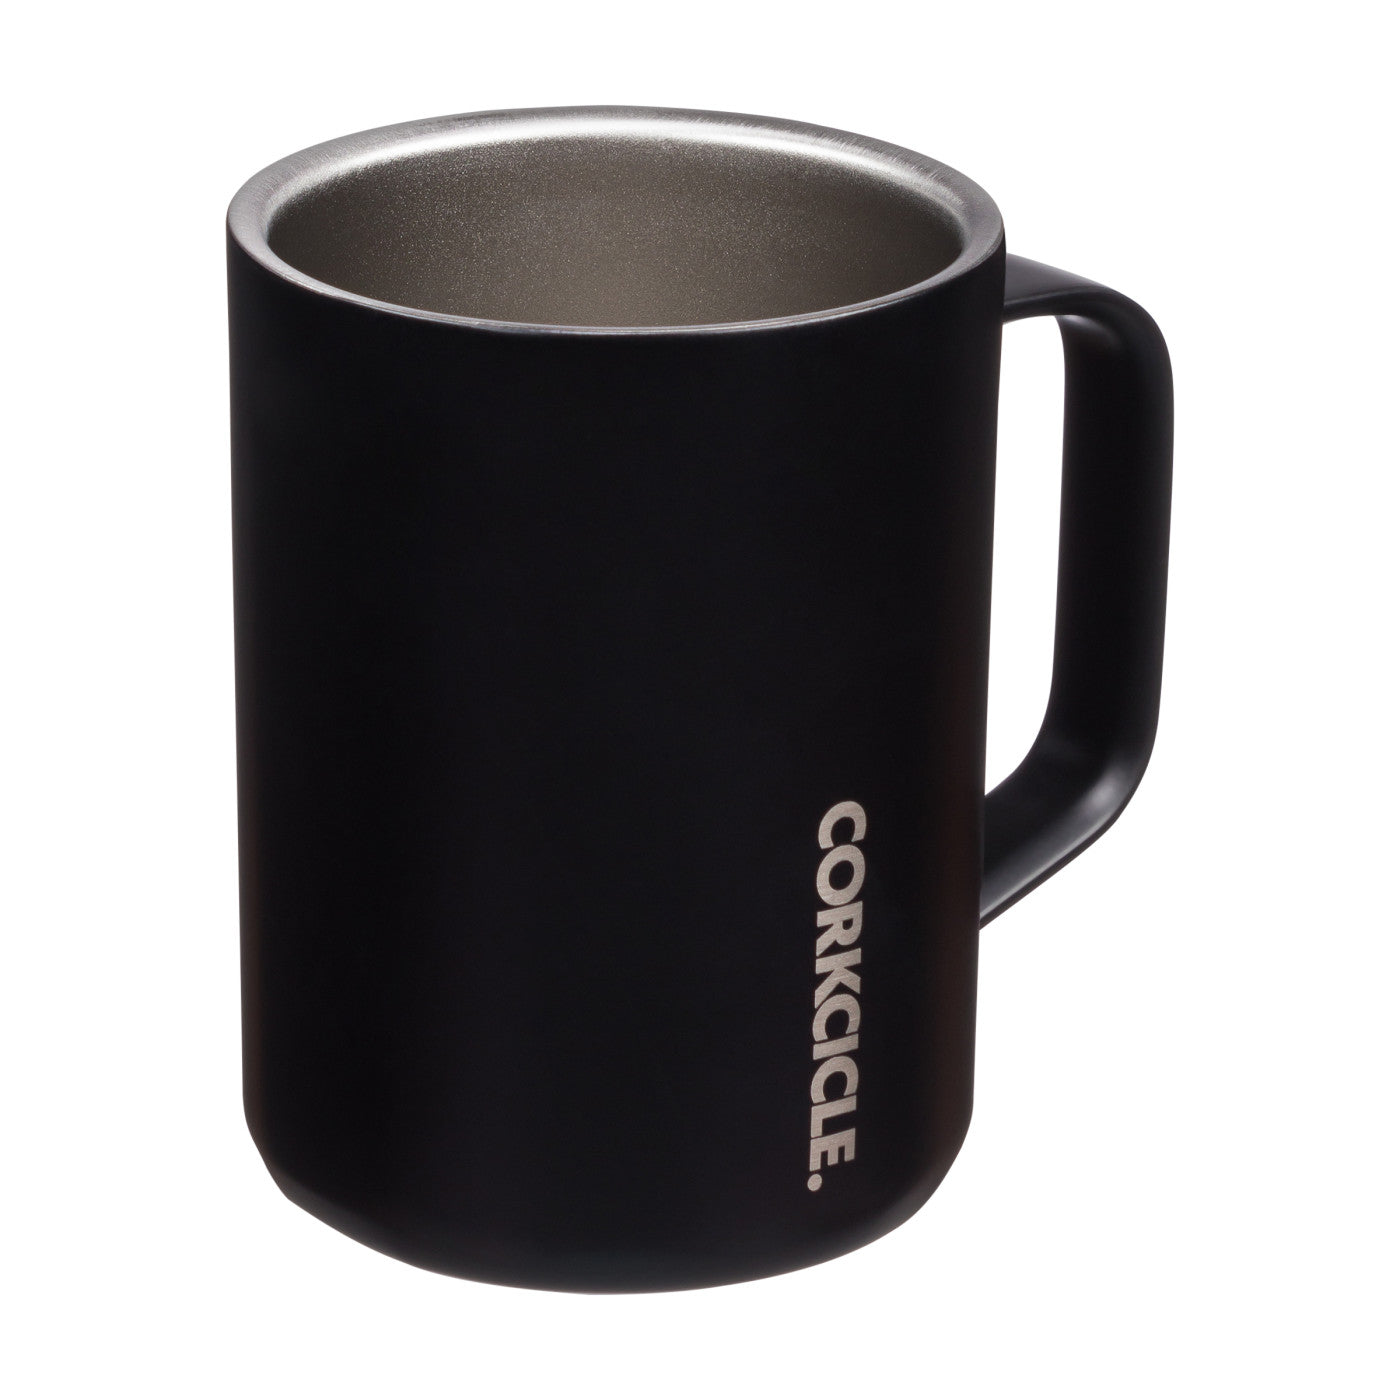 Corkcicle Coffee Mug 16 Oz, Black